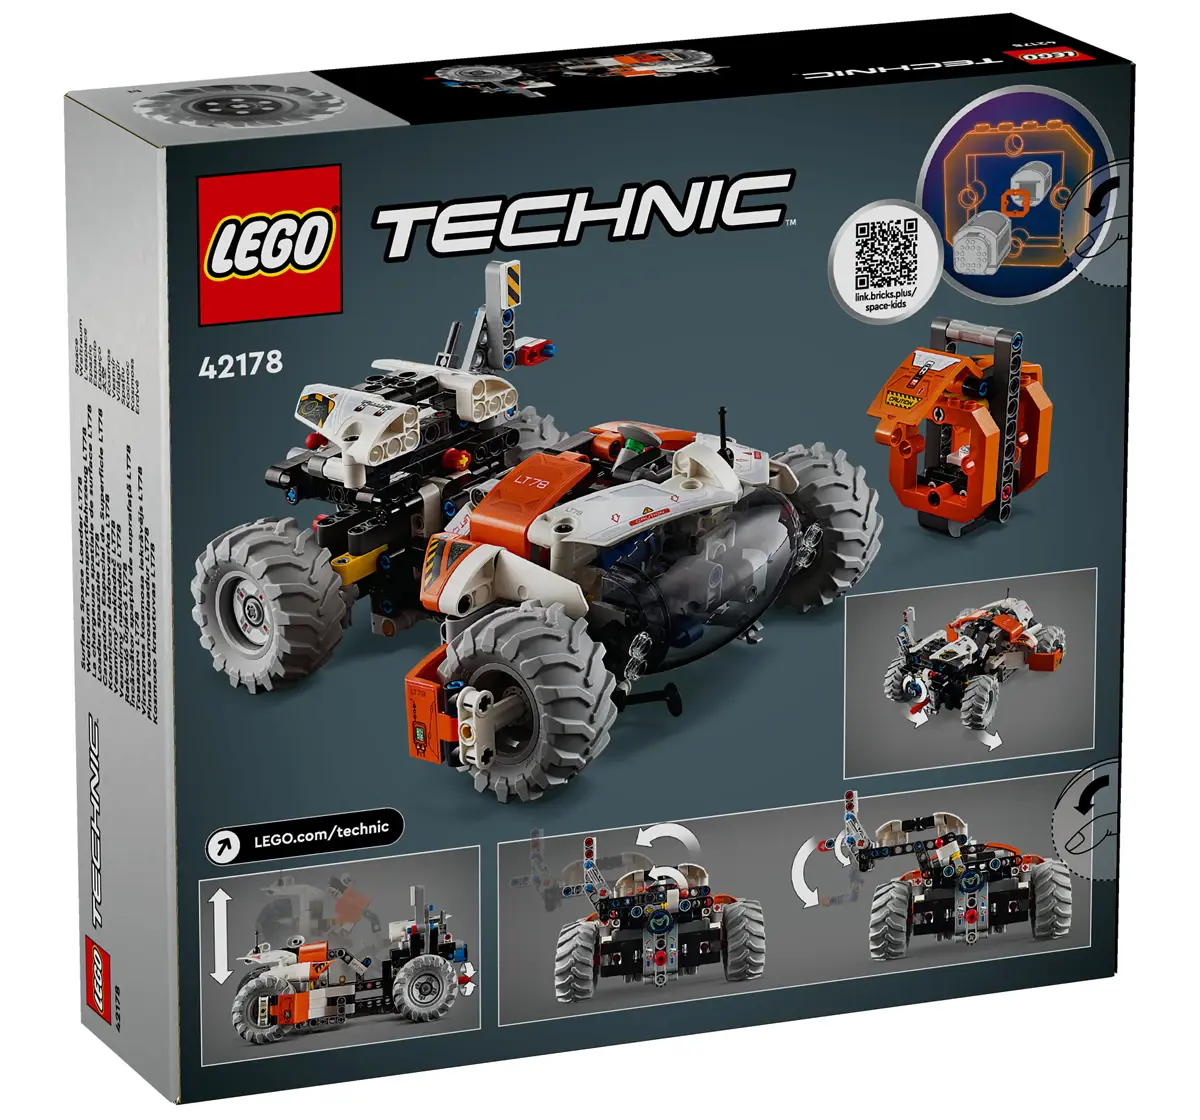 LEGO Technic Surface Space Loader LT78 Set 42178 (435 Pieces)